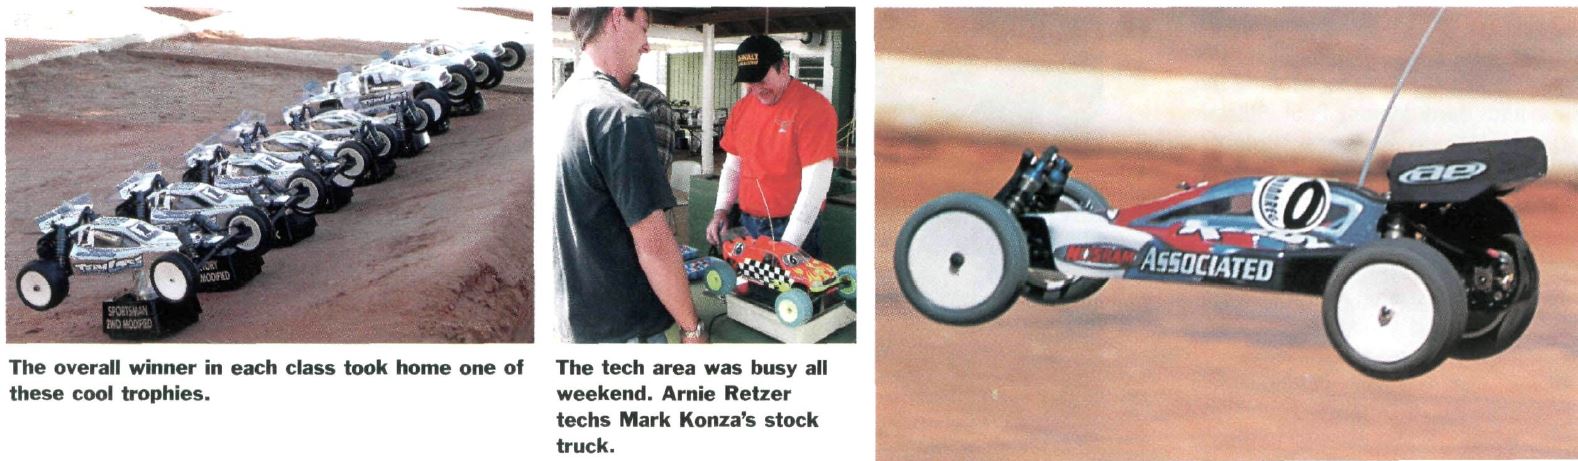 2nd AnnualTeam Losi Off-Road Championship at the Minnreg RC Car Club of Largo, FL Aug 2003 15